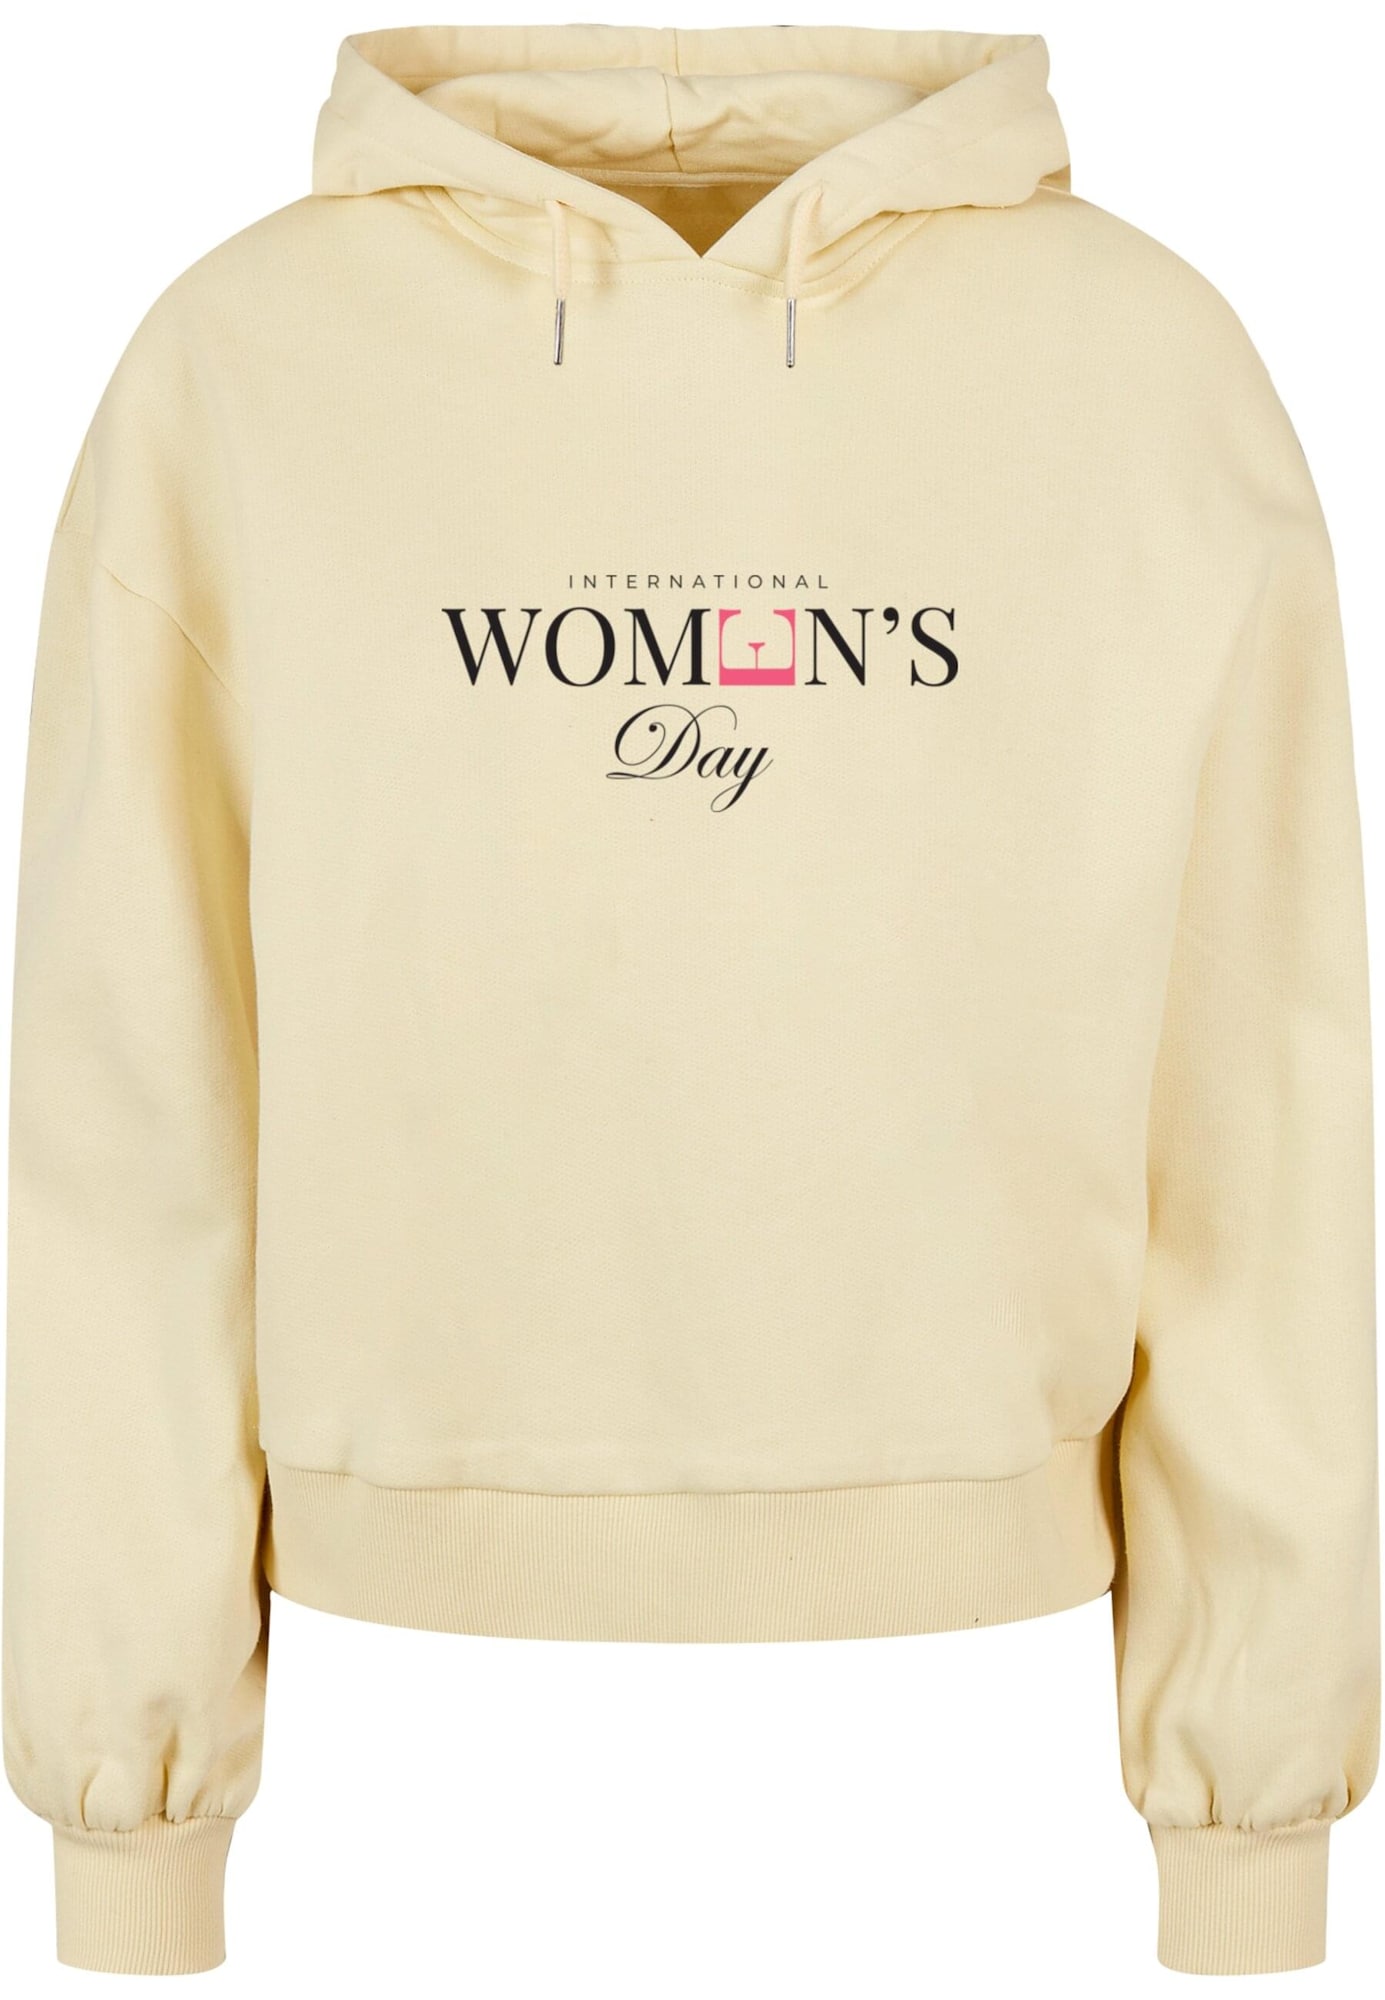 sweat-shirt 'wd - international women's day'